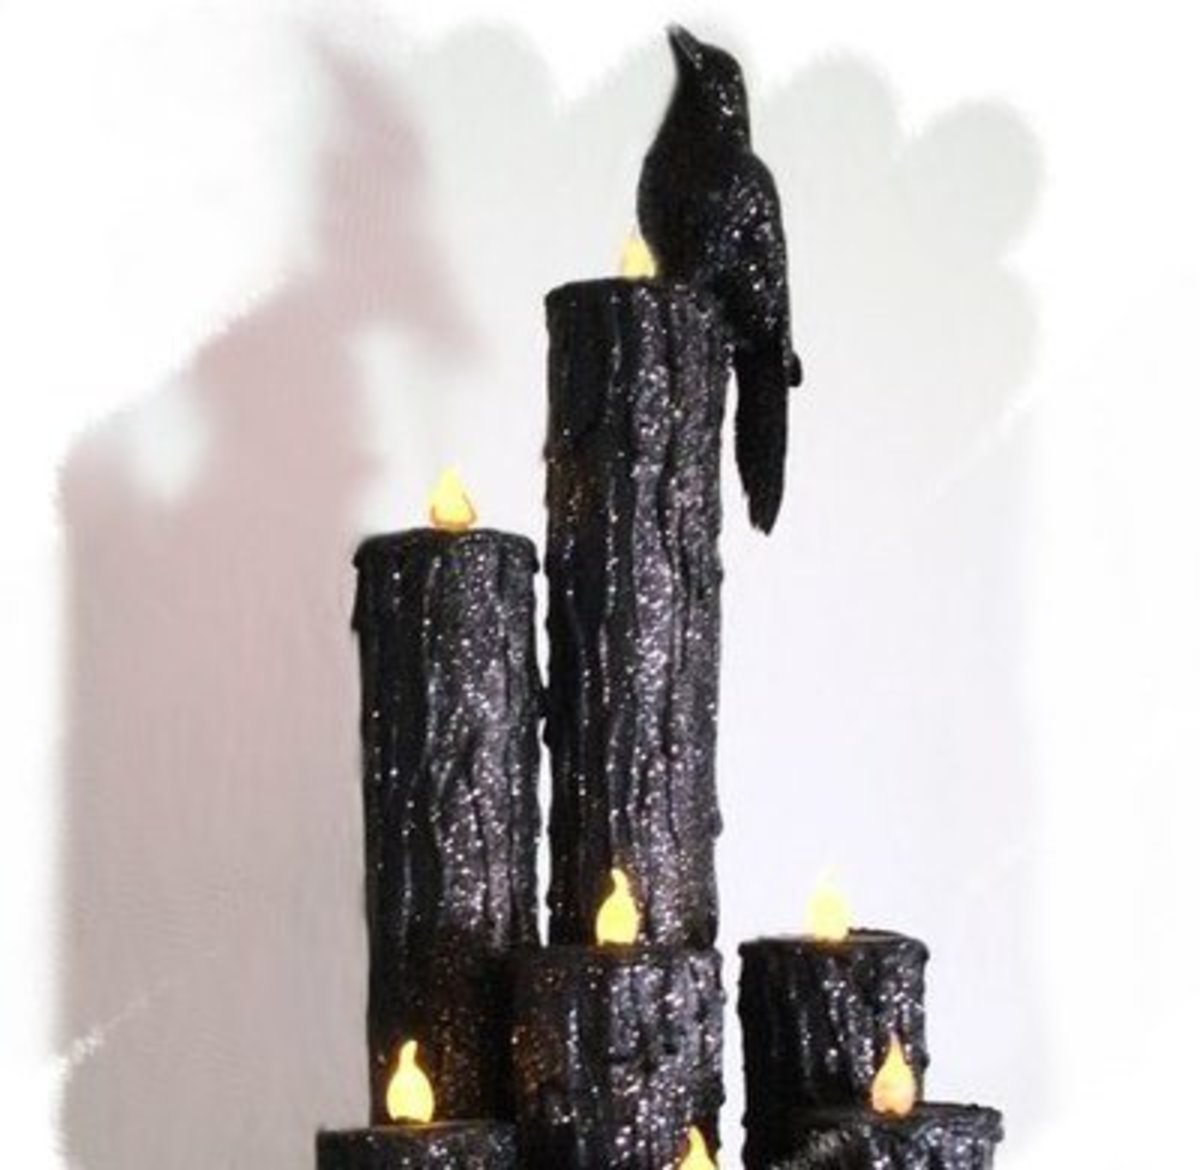 Black Halloween candles.